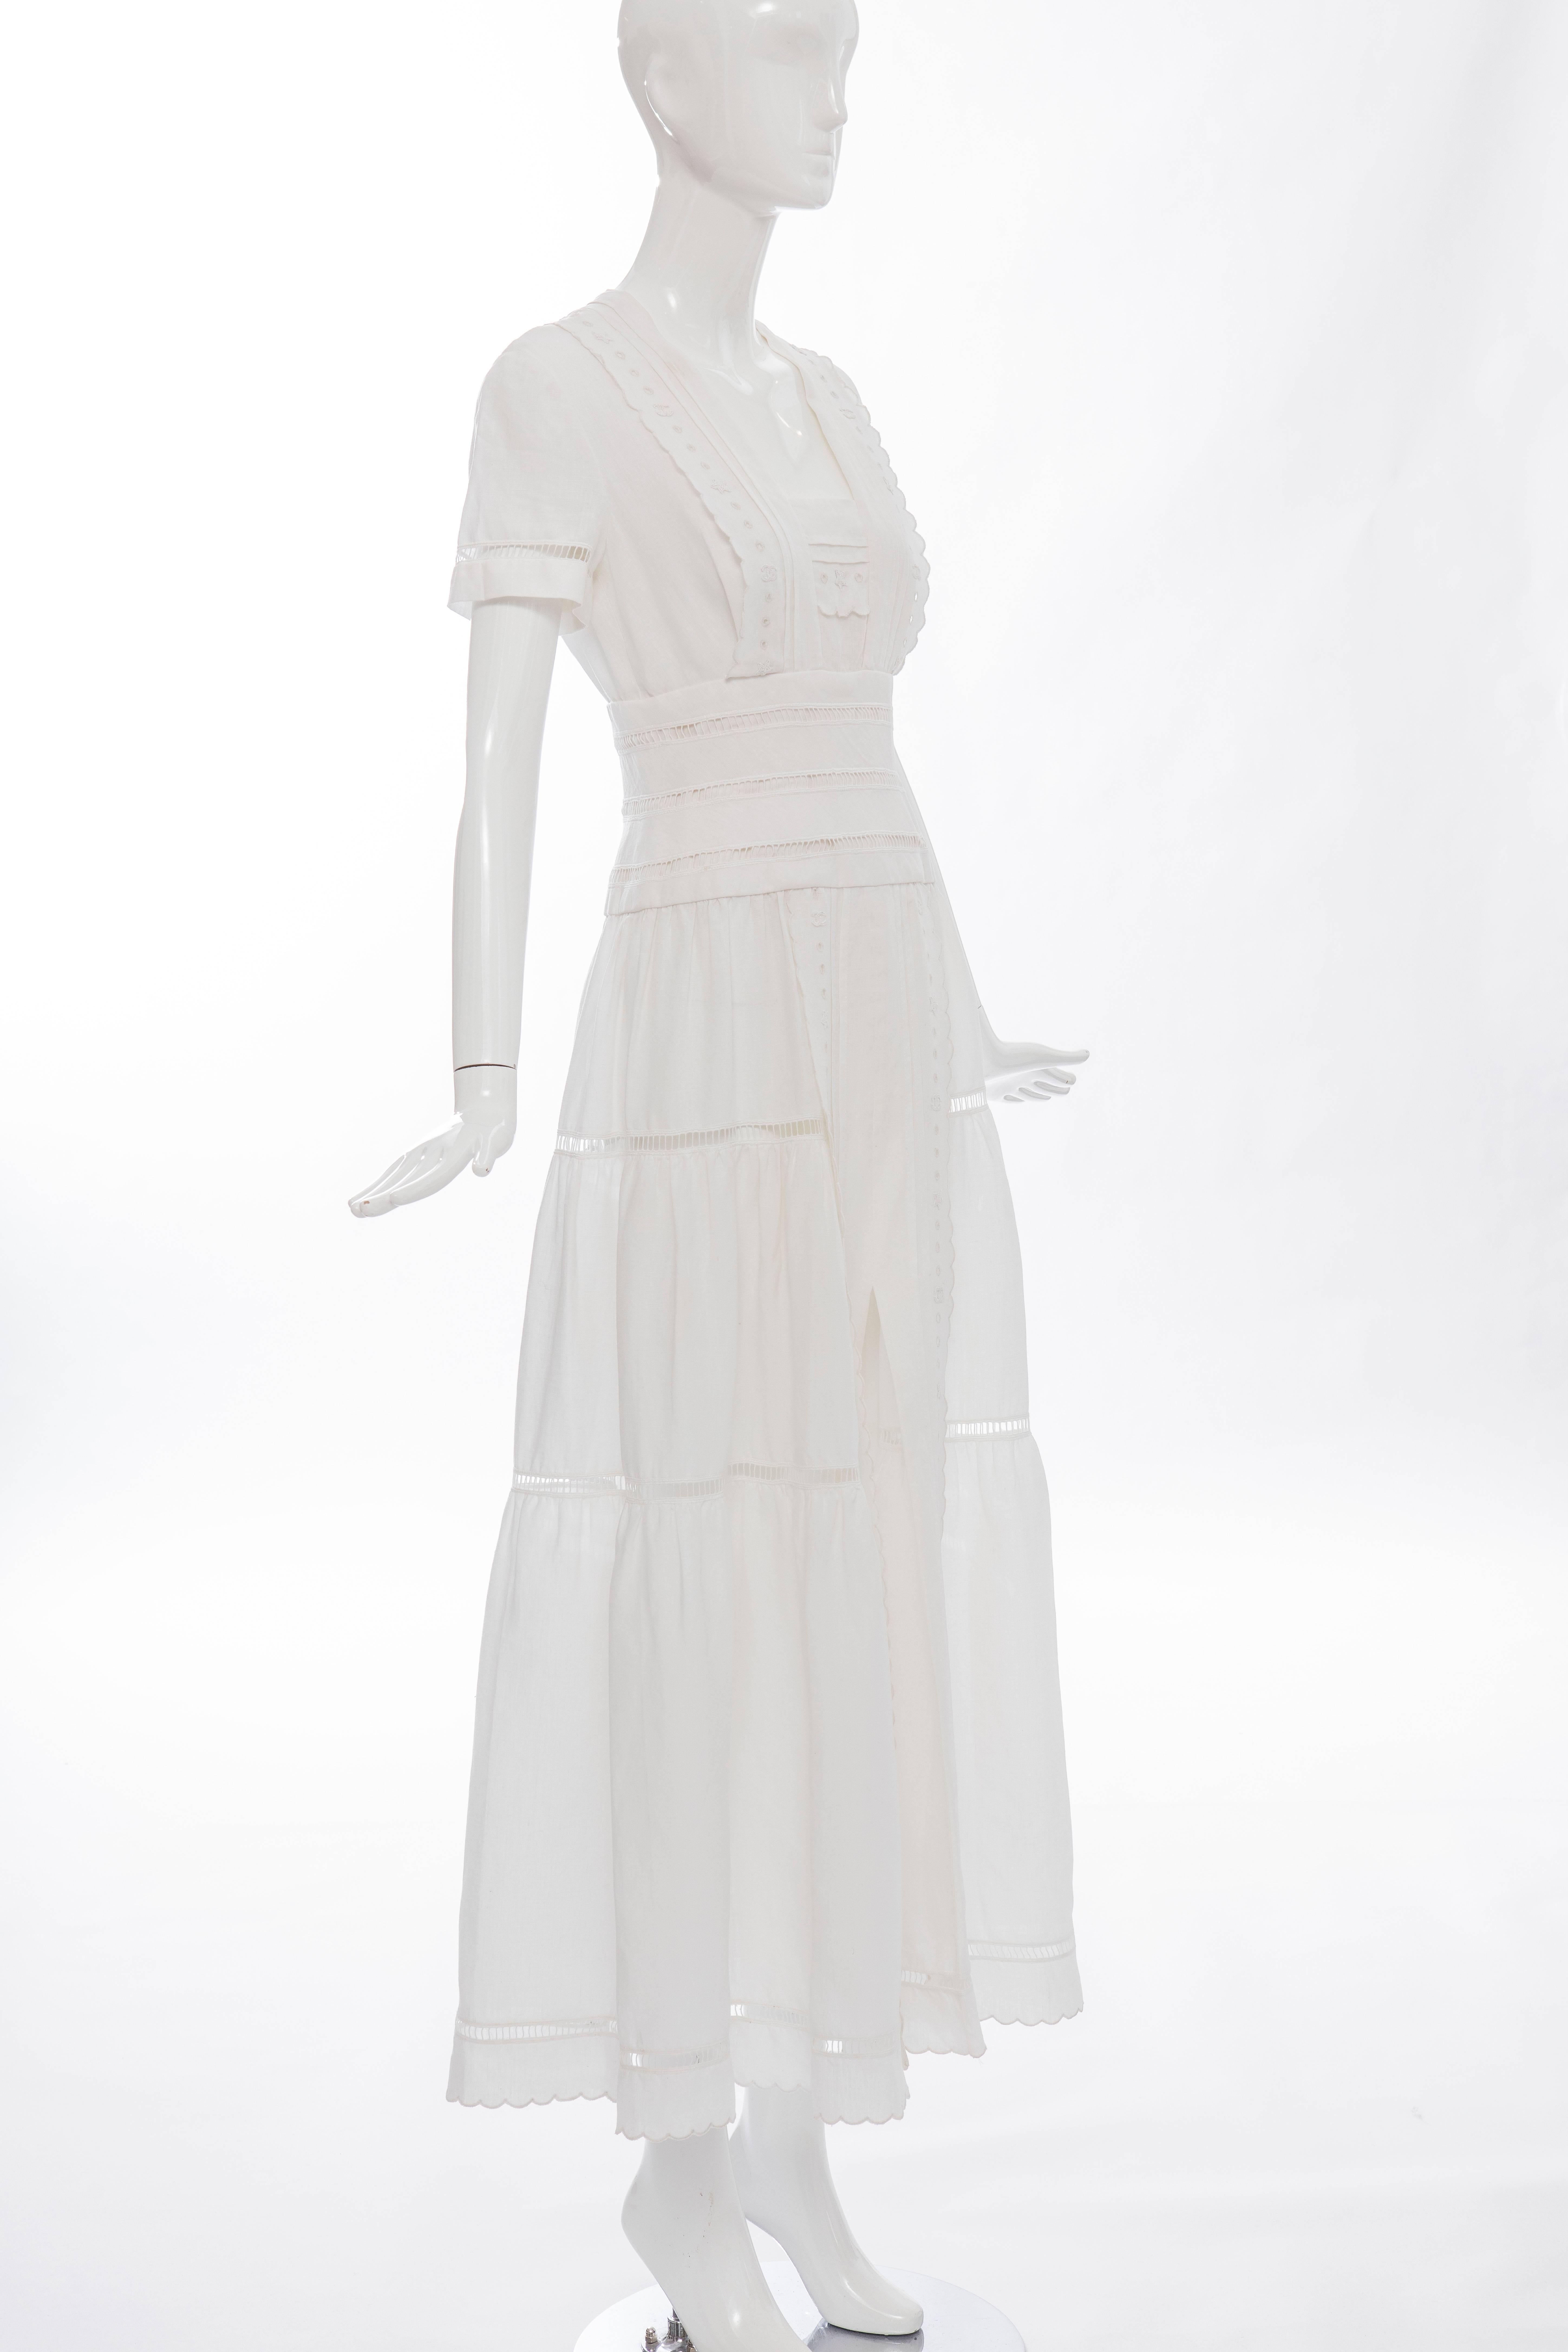 Women's Chanel Short Sleeve Whitework Embroidered Linen Dress, Circa 1980's